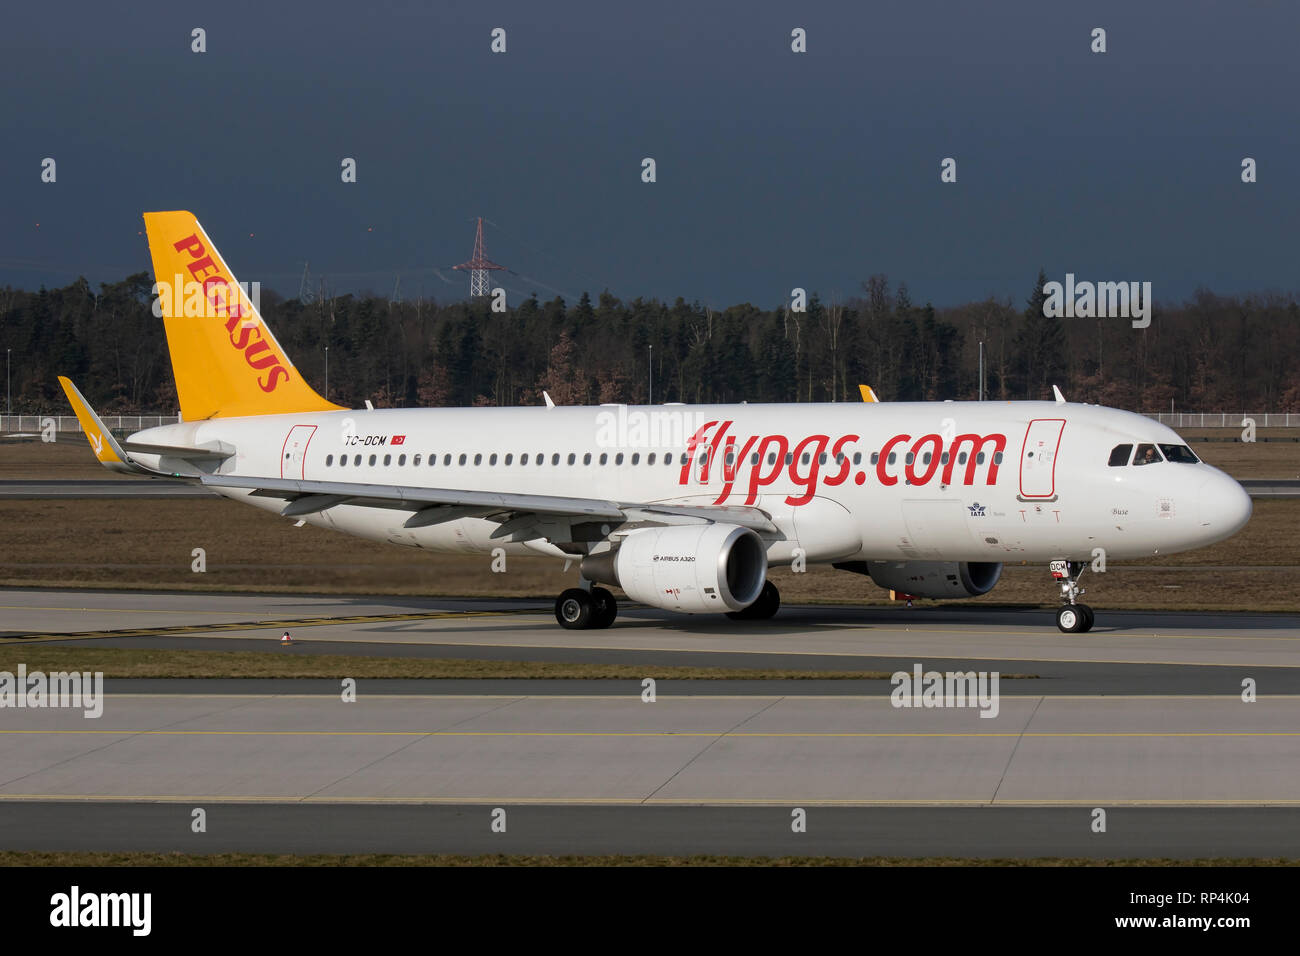 TC-DCM Airbus A320 of Pegasus flypgs.com landing at Frankfurt Airport Germany on 07/02/2018 Stock Photo